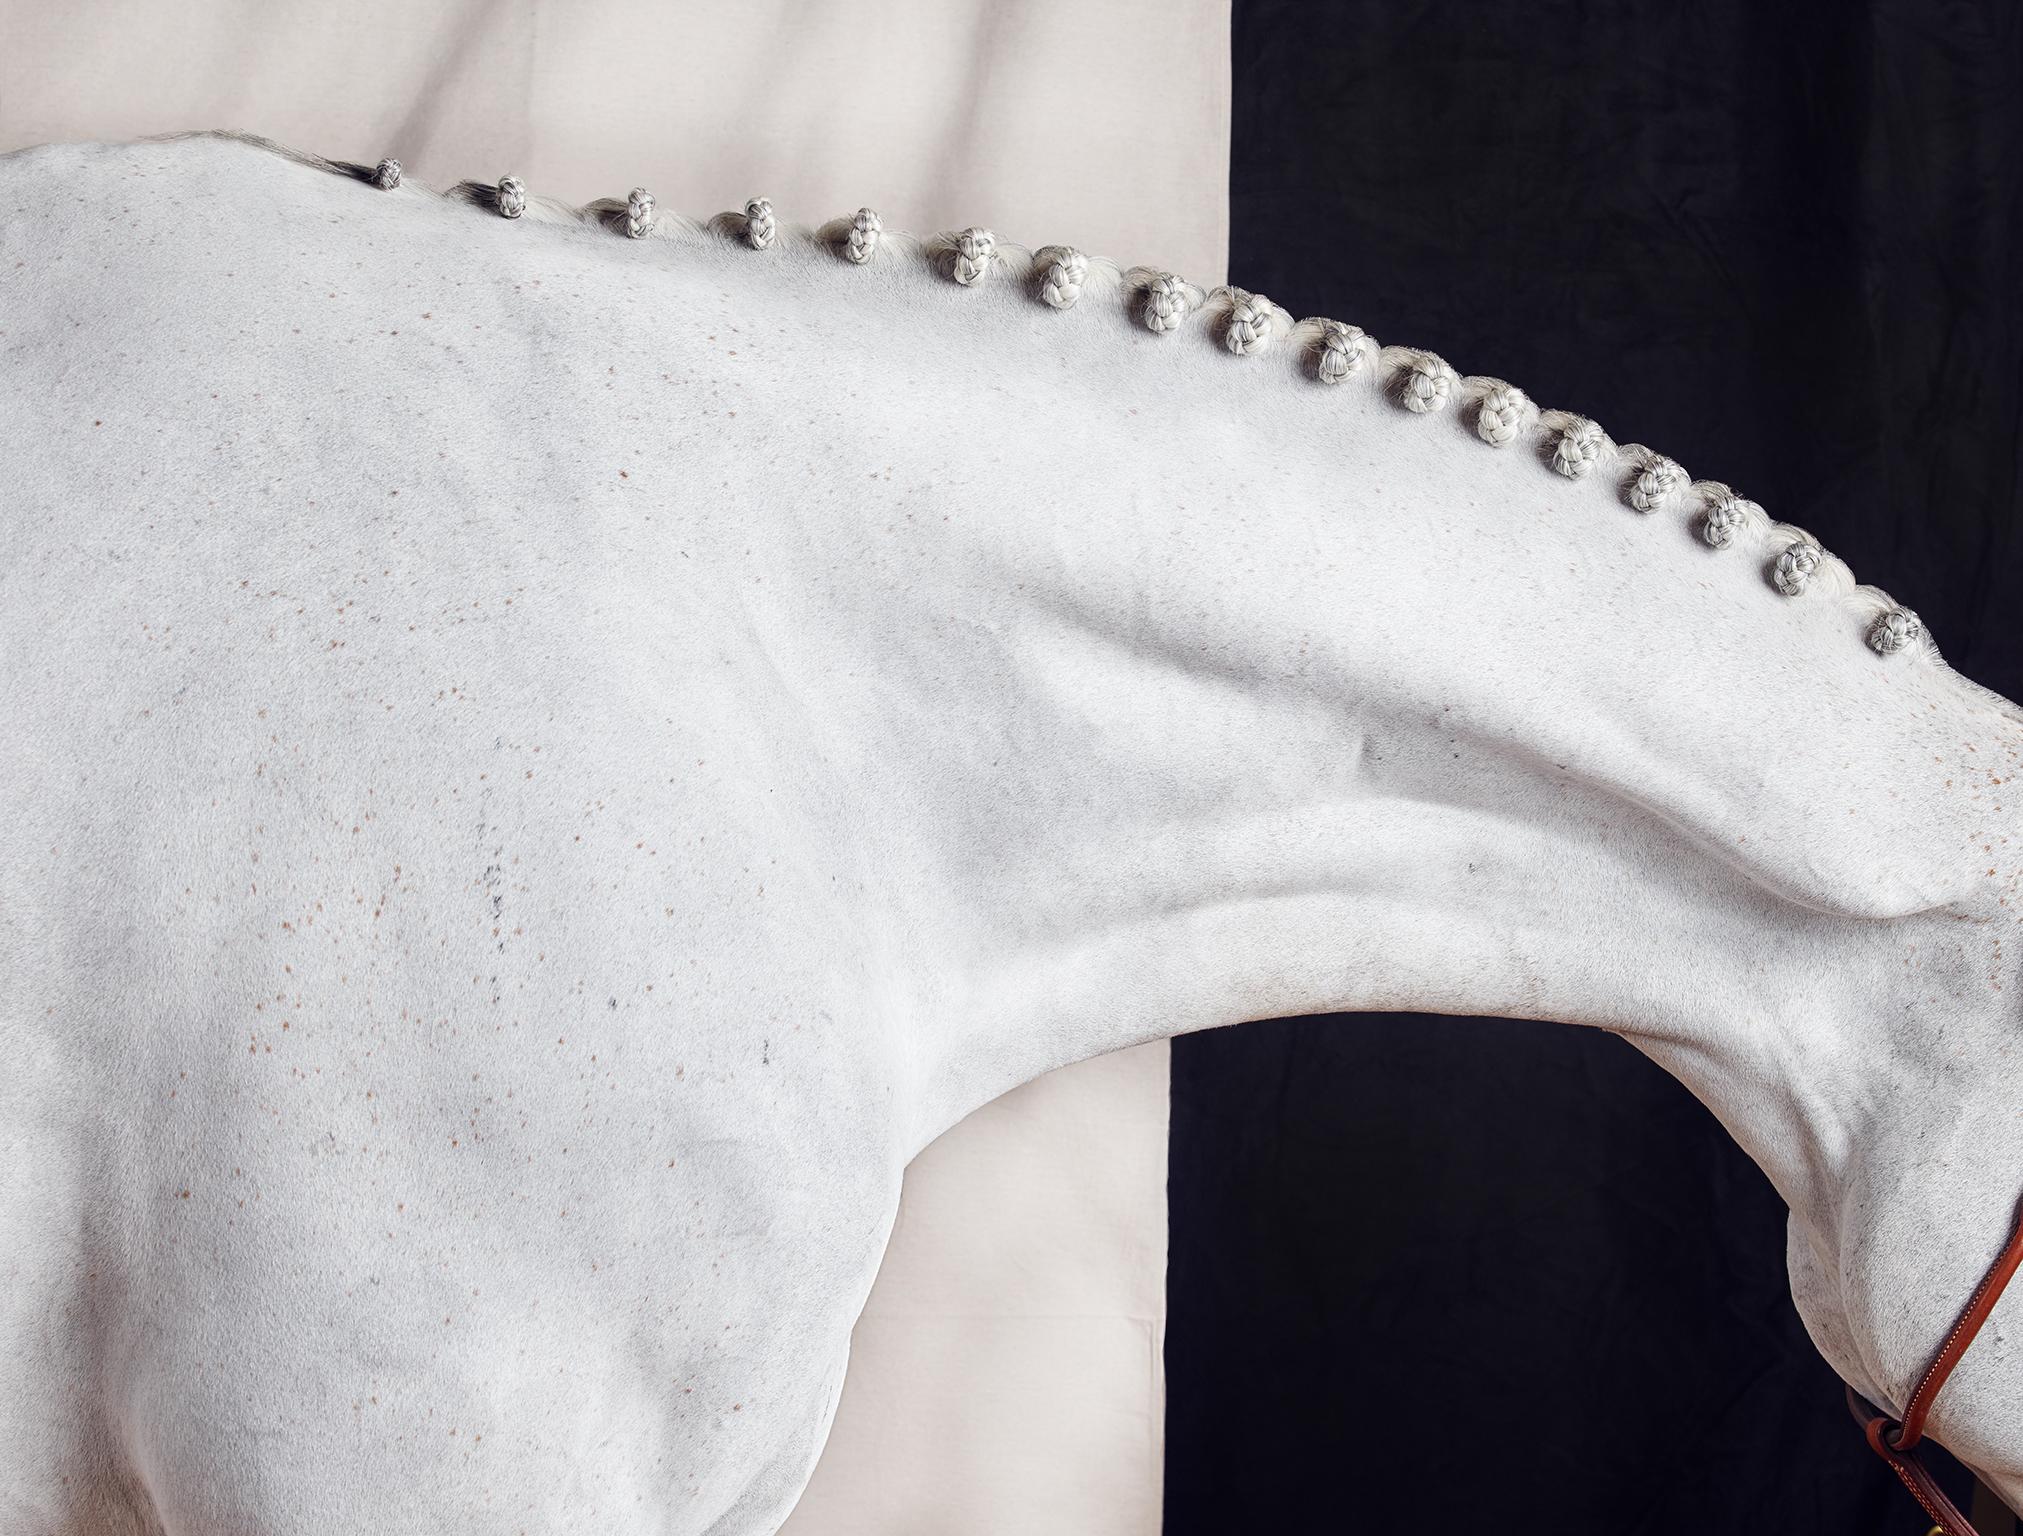 Titan Neck - Black and White Limited Edition Horse Portrait 2015 - Photograph by Juan Lamarca